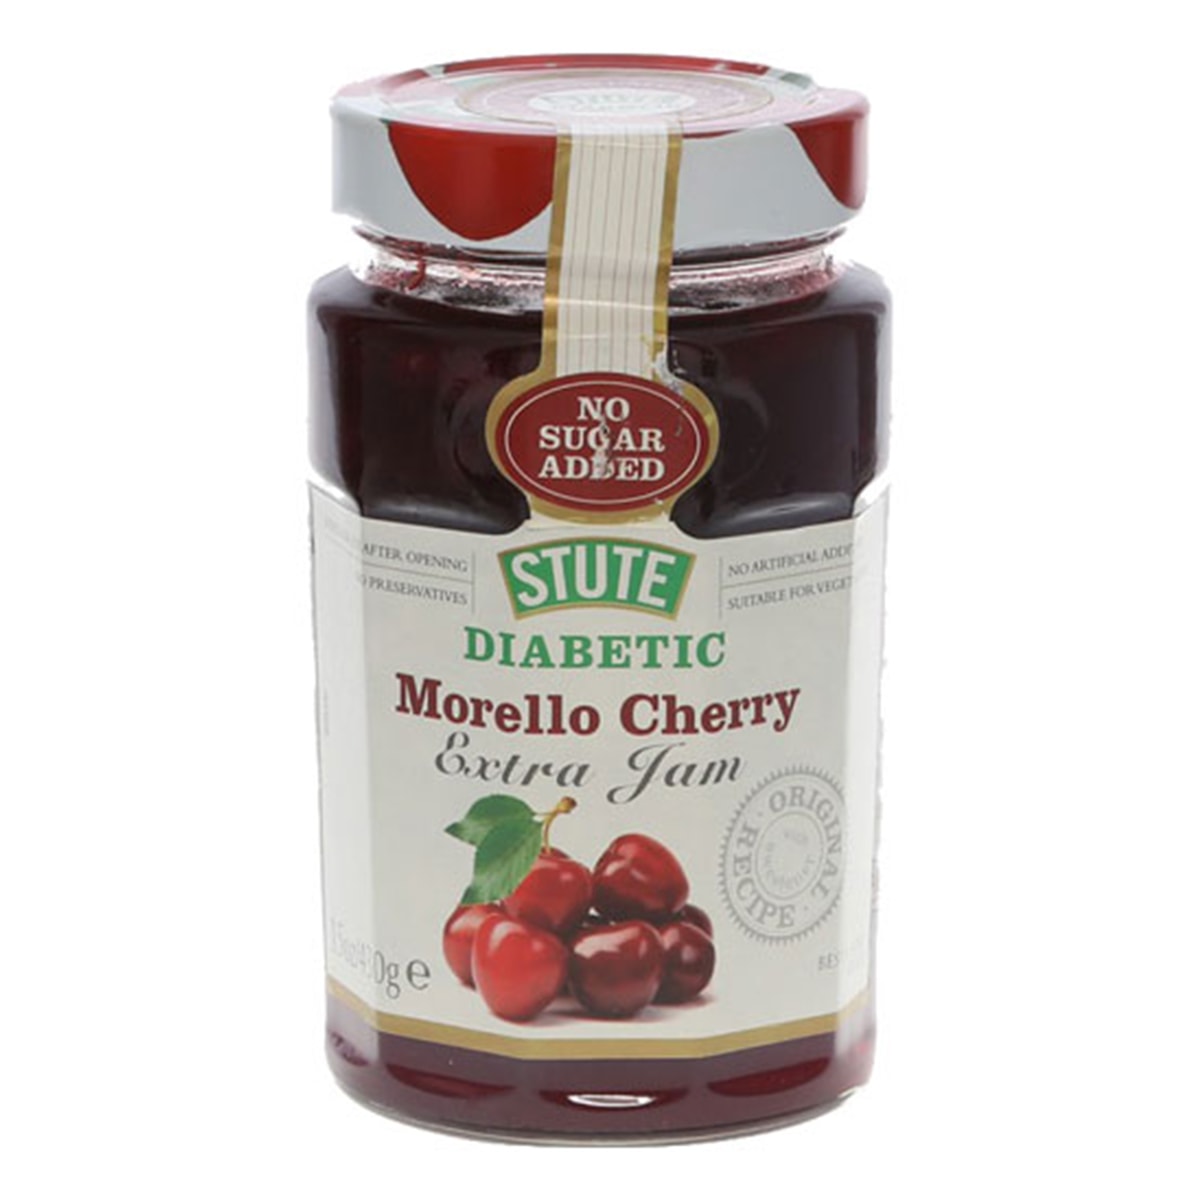 Buy Stute Diabetic Morello Cherry Extra Jam (No Sugar Added) - 430 gm